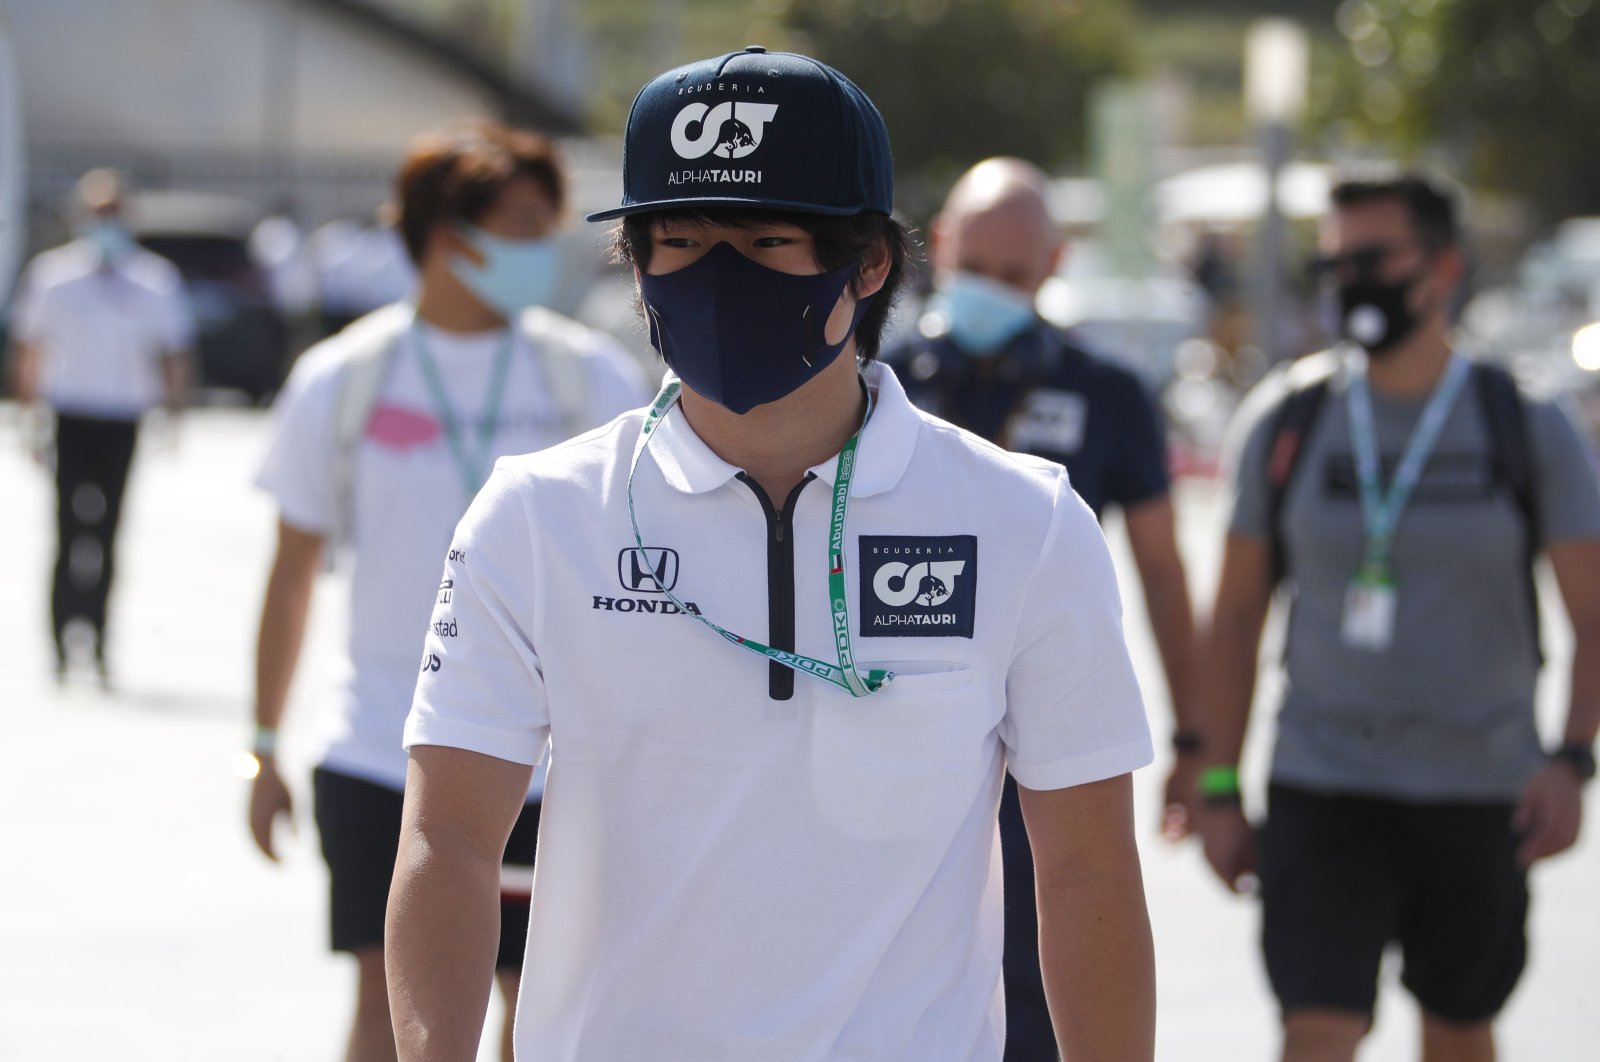 AlphaTauri's Japanese driver Yuki Tsunoda arrives for the first practice session ahead of the F1 Abu Dhabi Grand Prix at the Yas Marina Circuit, in Abu Dhabi, UAE, Dec. 11, 2020. (AFP Photo)